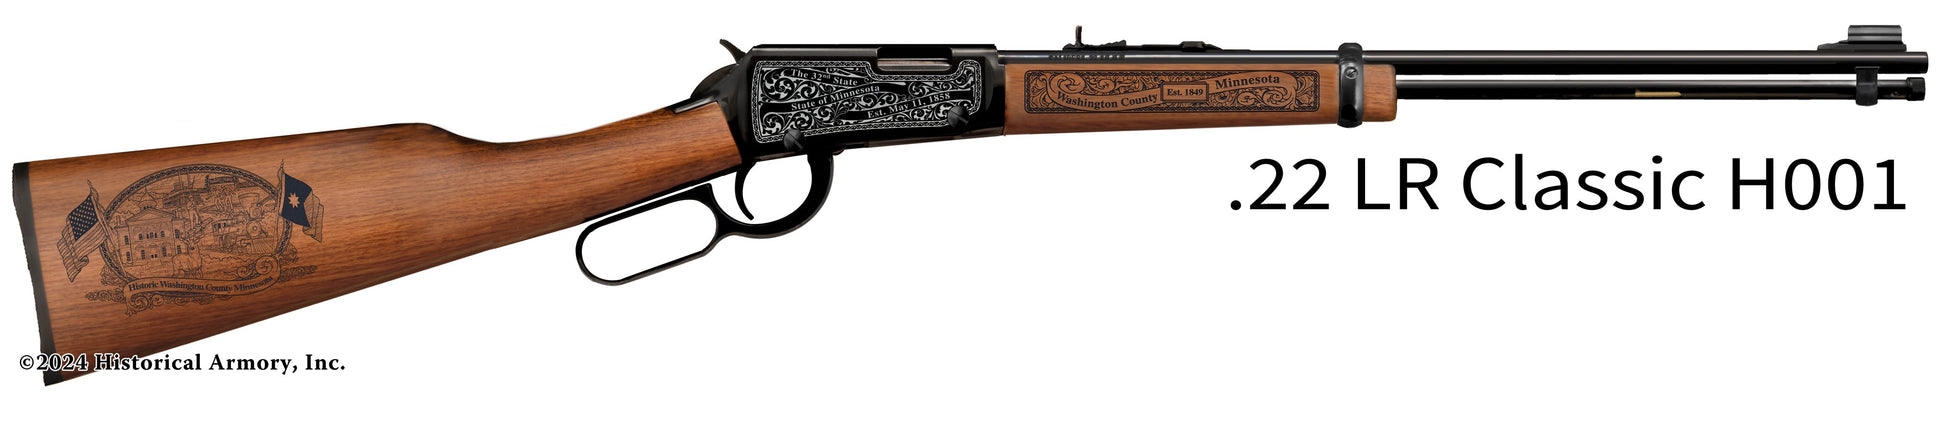 Washington County Minnesota Engraved Henry H001 Rifle